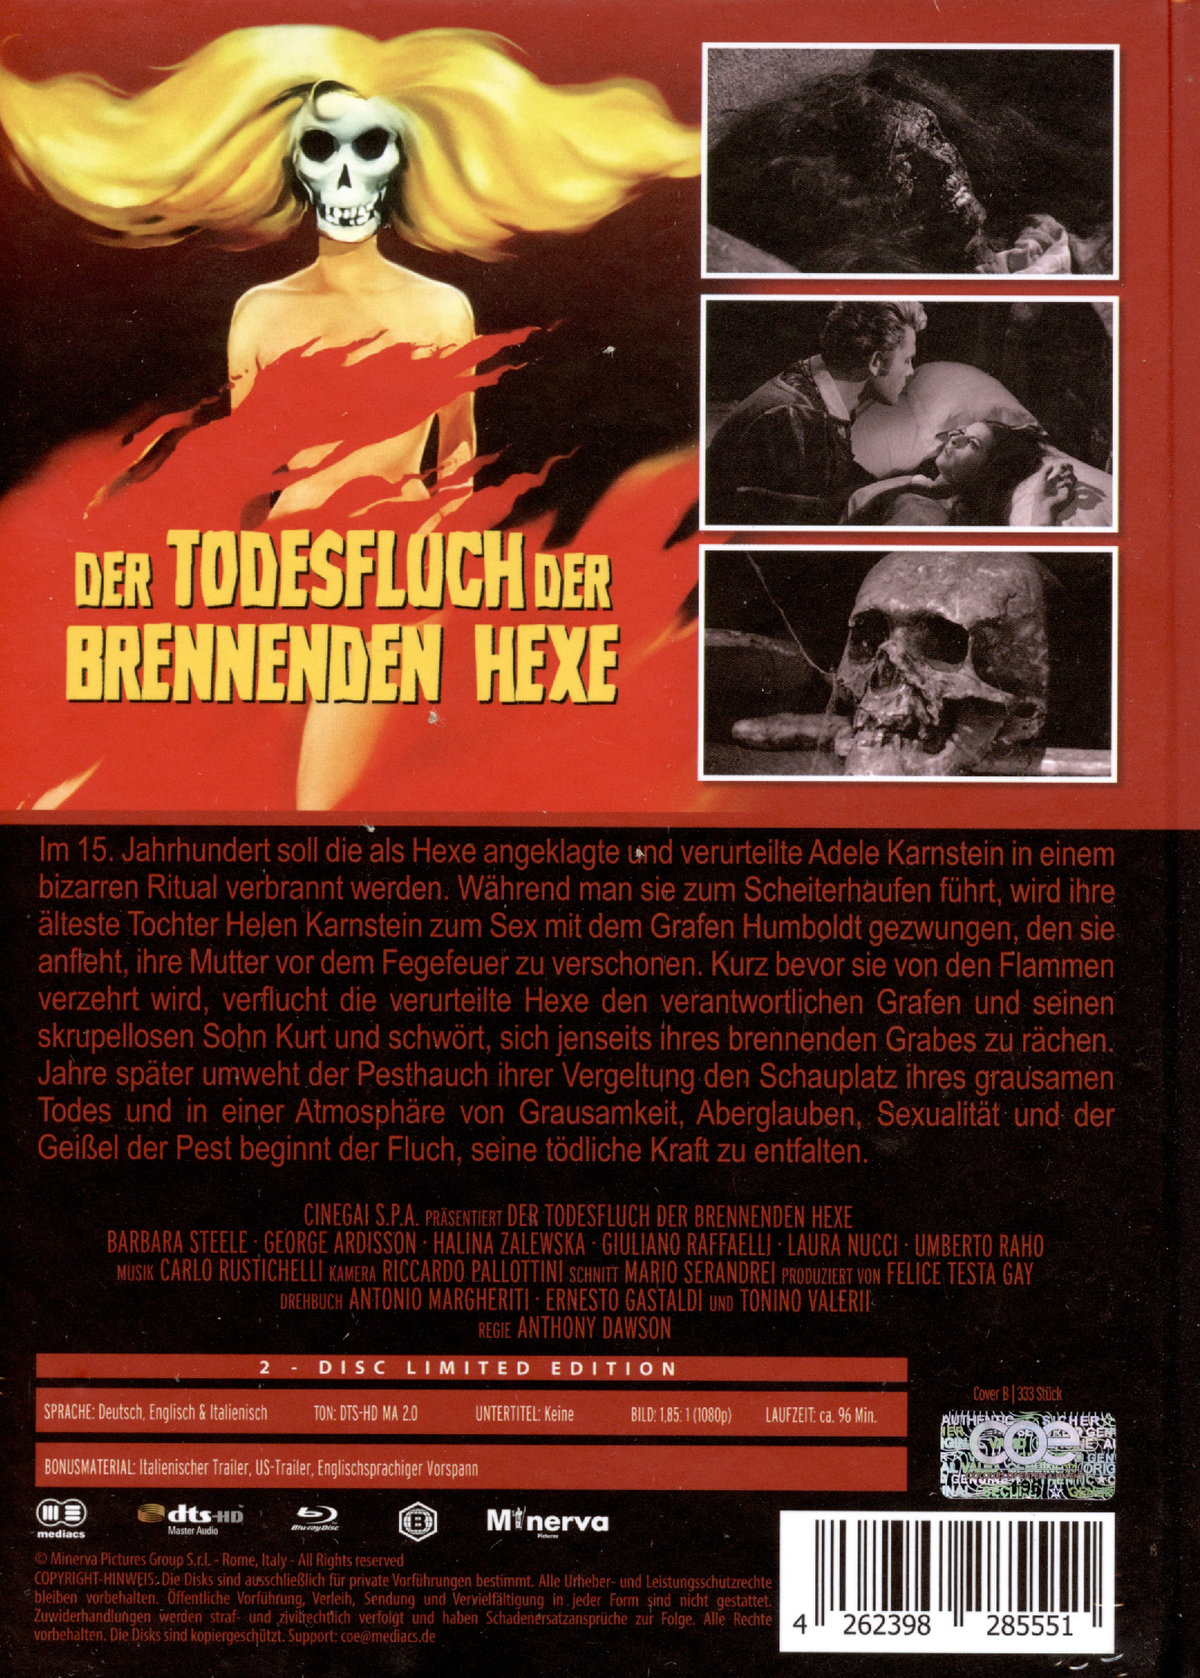 Todesfluch der brennenden Hexe, Der - Uncut Mediabook Edition (DVD+blu-ray) (B)